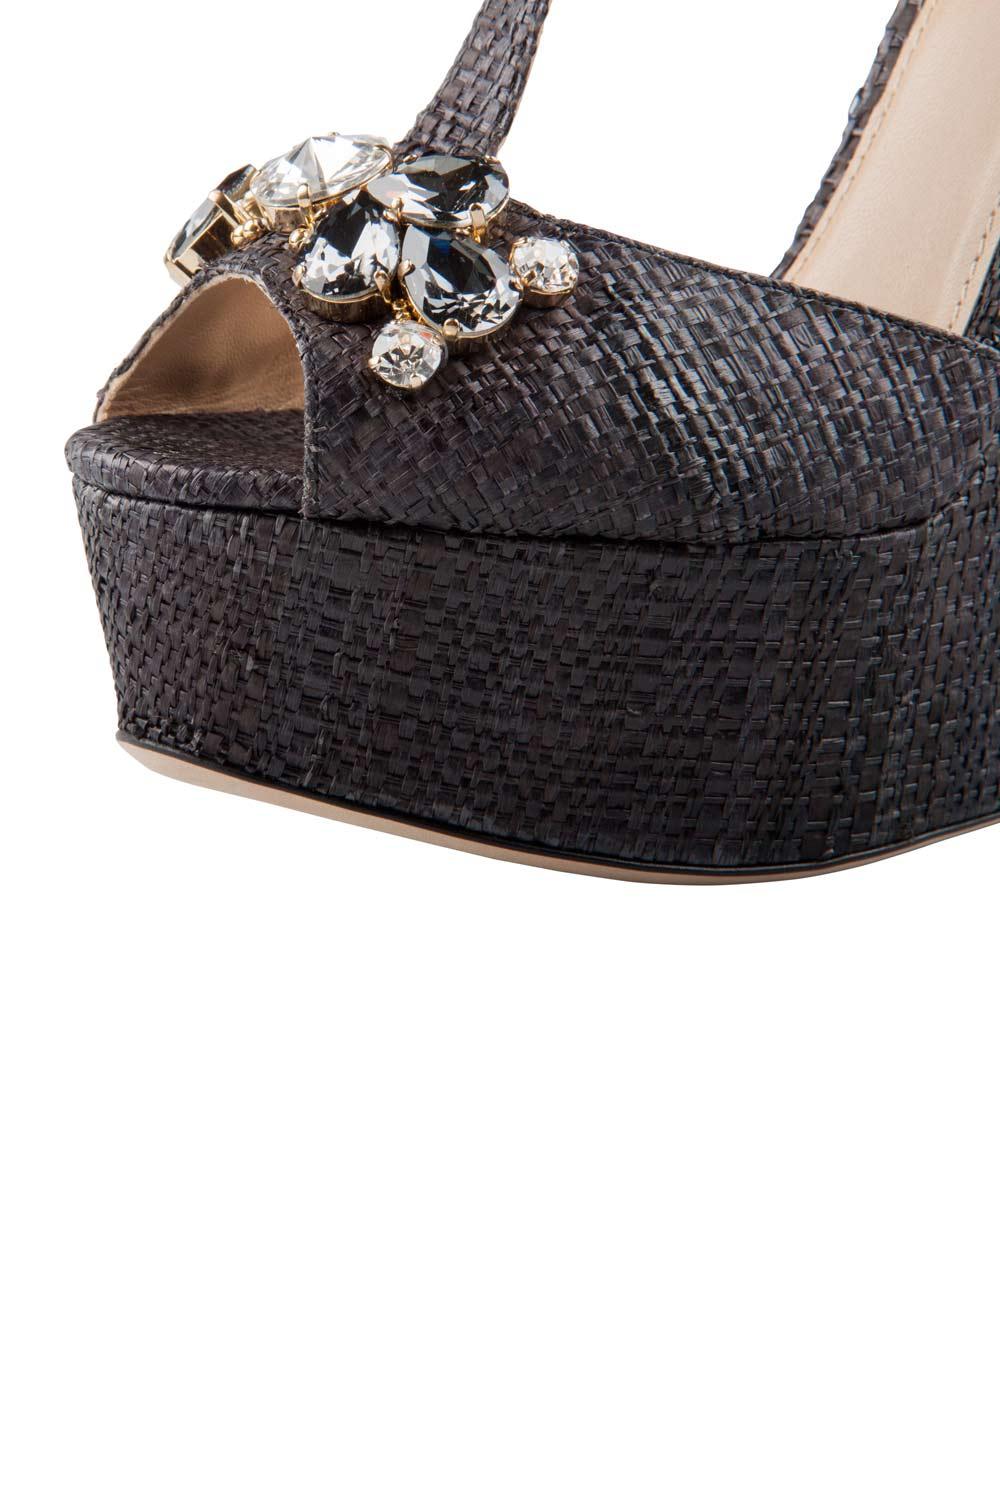 Dolce and Gabbana Black Crystal Embellished Wedge Peep Toe Sandals Size 36 1